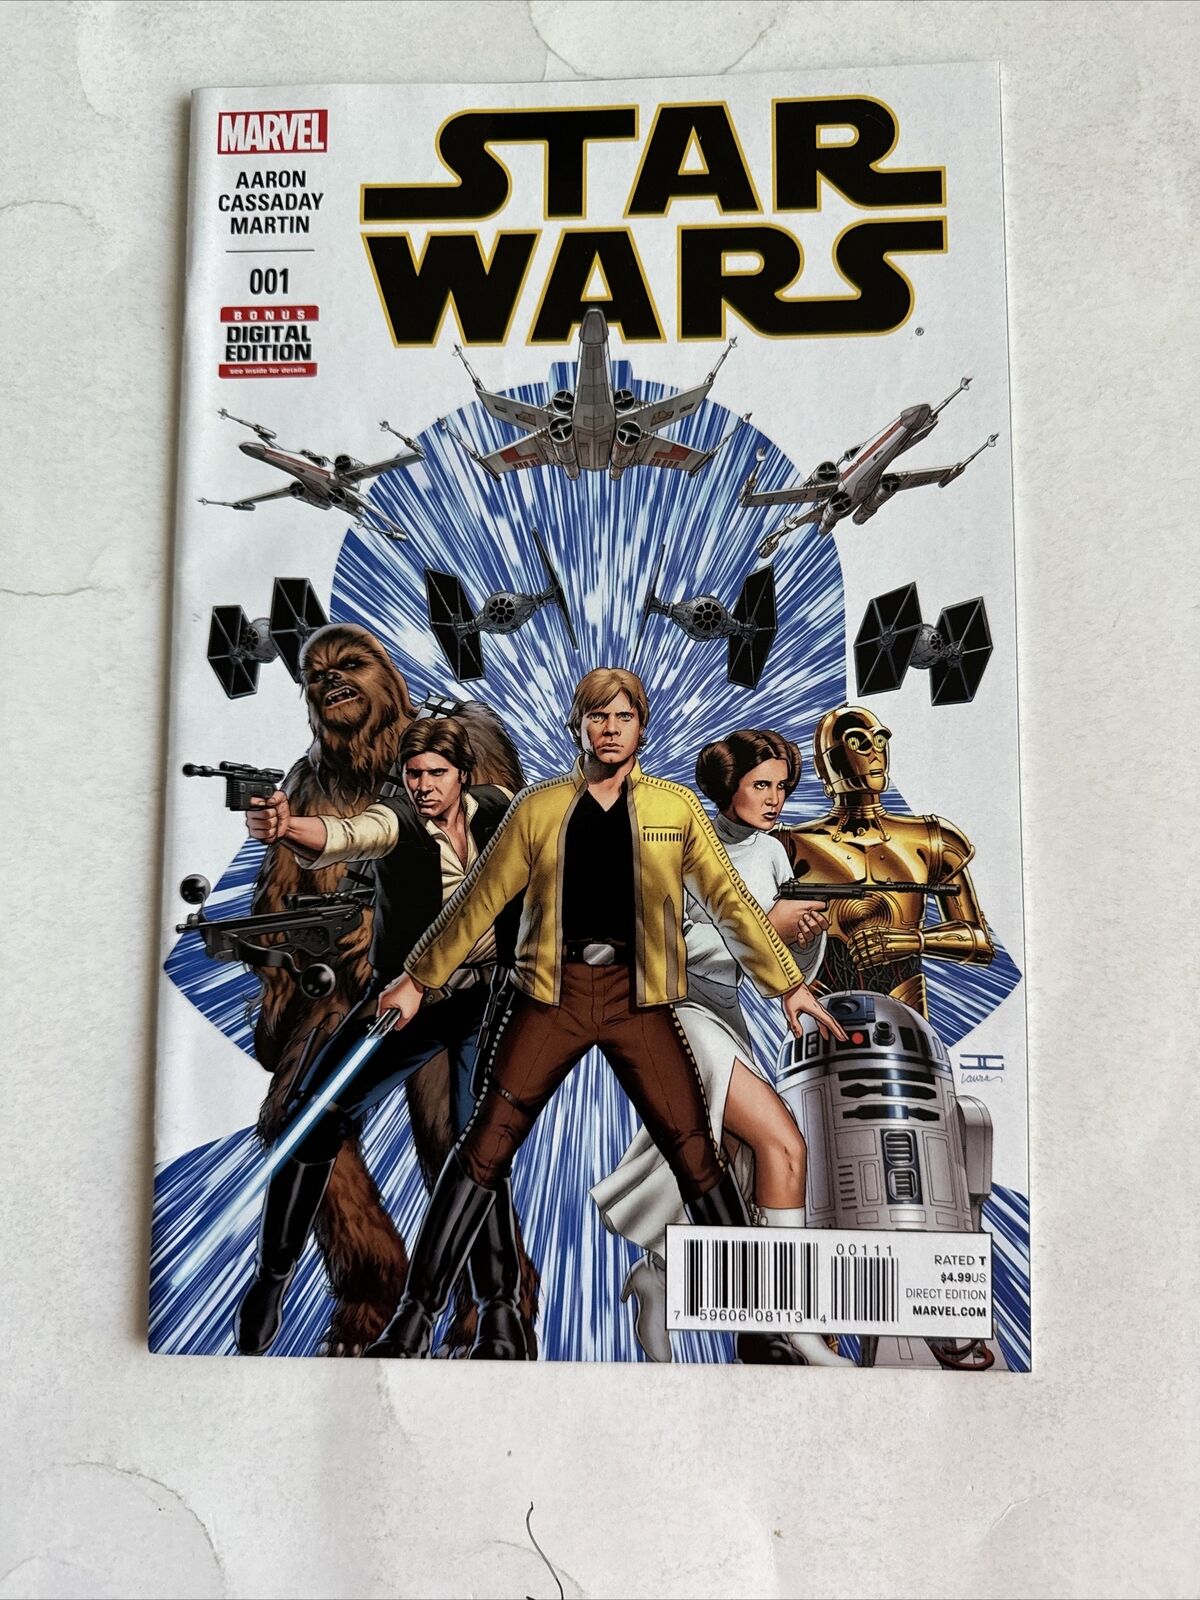 Star Wars #1 Main Cover First 1st Print Marvel 2015 Aaron Cassaday